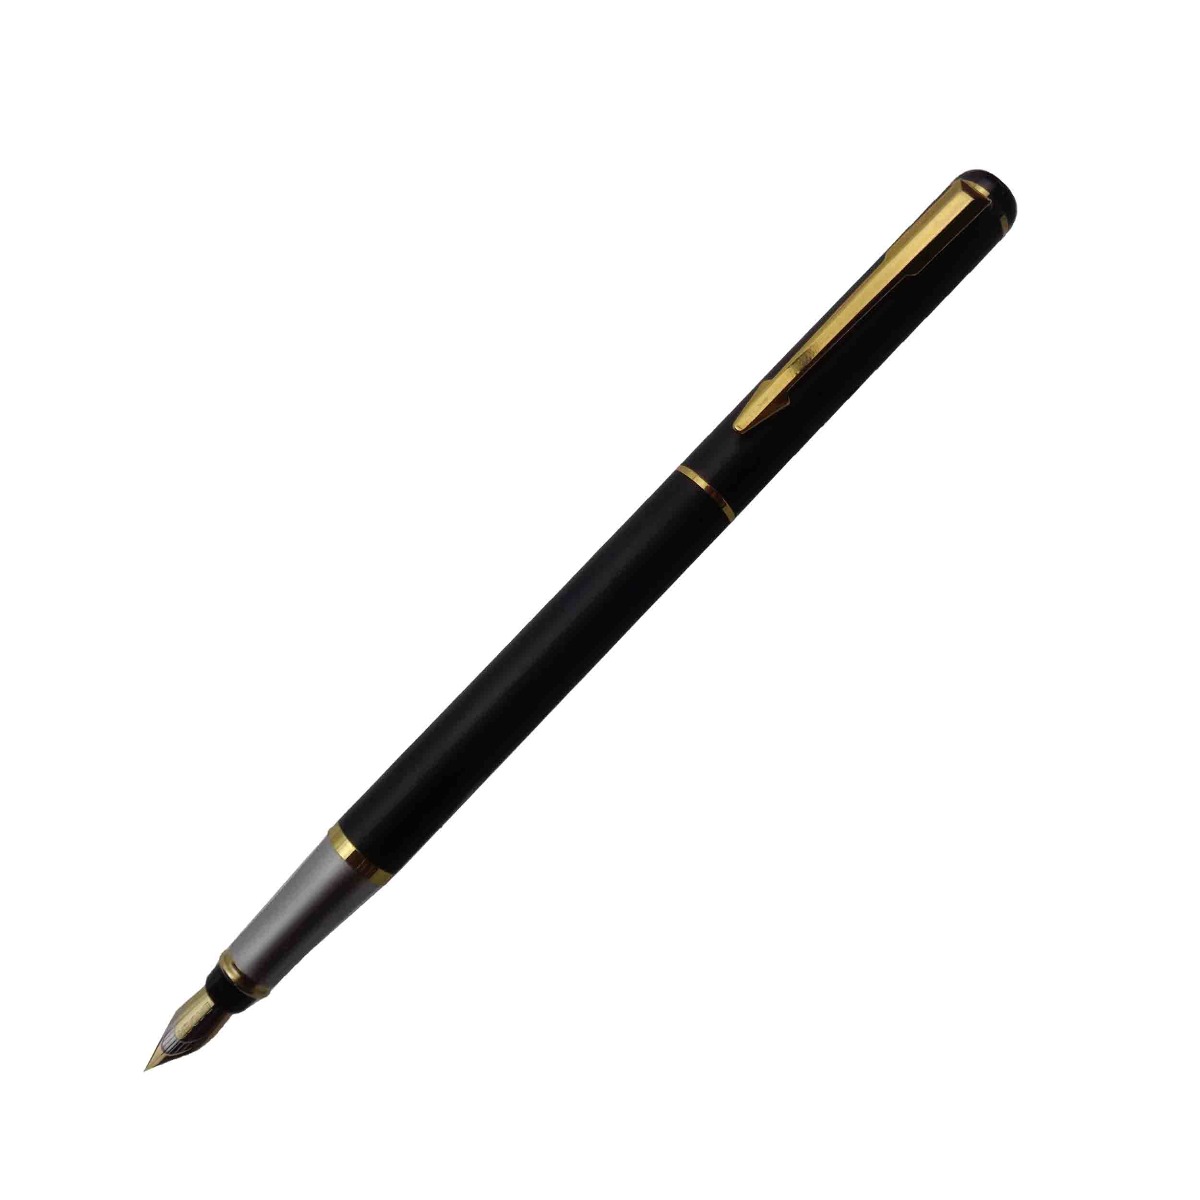 Baoer 801 Model: 15446 Black color mat finish body with golden clip cap type medium tip fountain pen